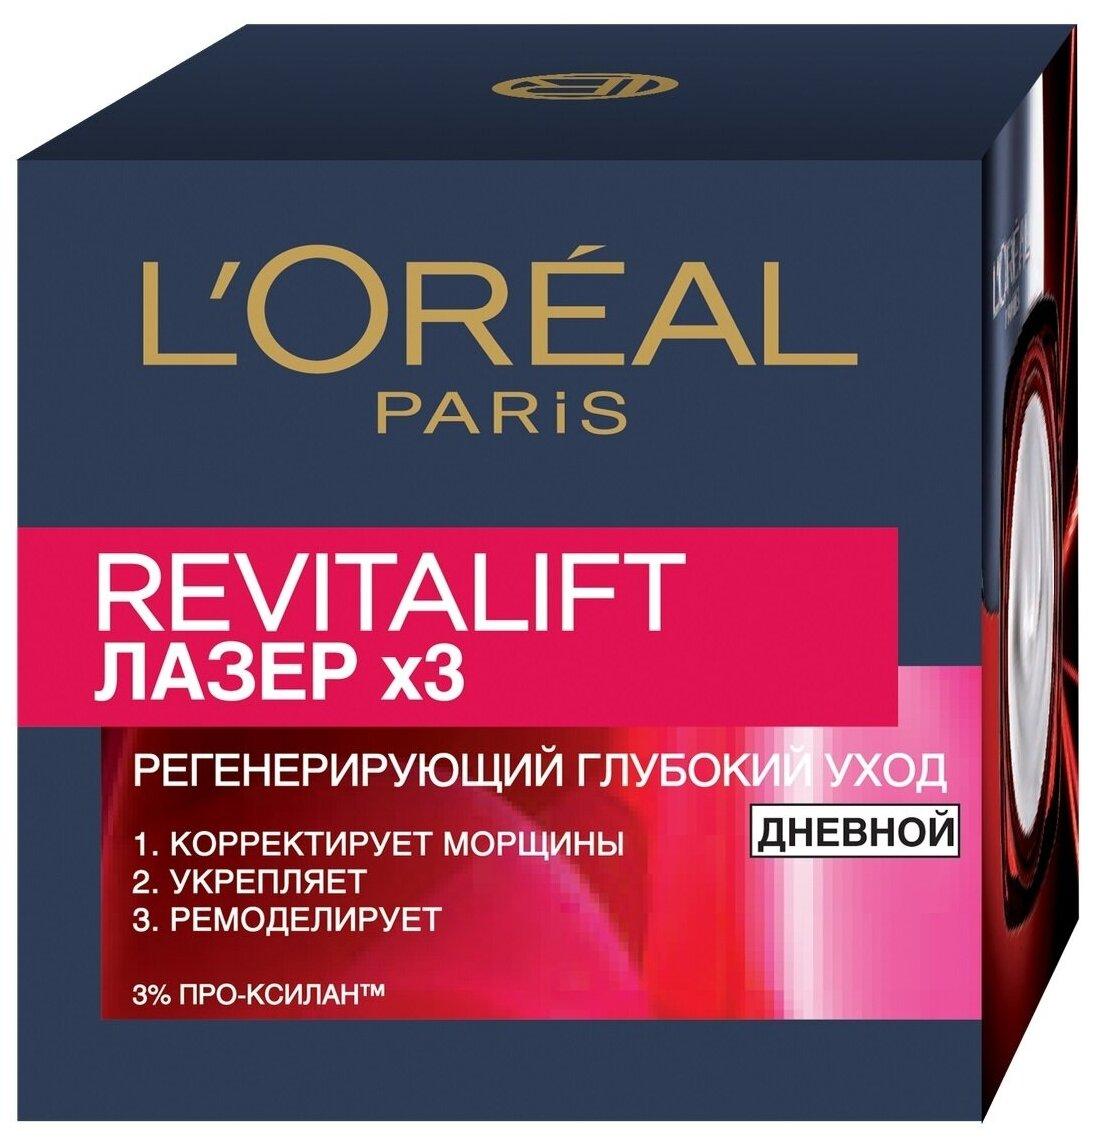 Крем L'Oreal Paris Revitalift Лазер х3 регенерирующий глубокий уход дневной для лица 50 мл., картон